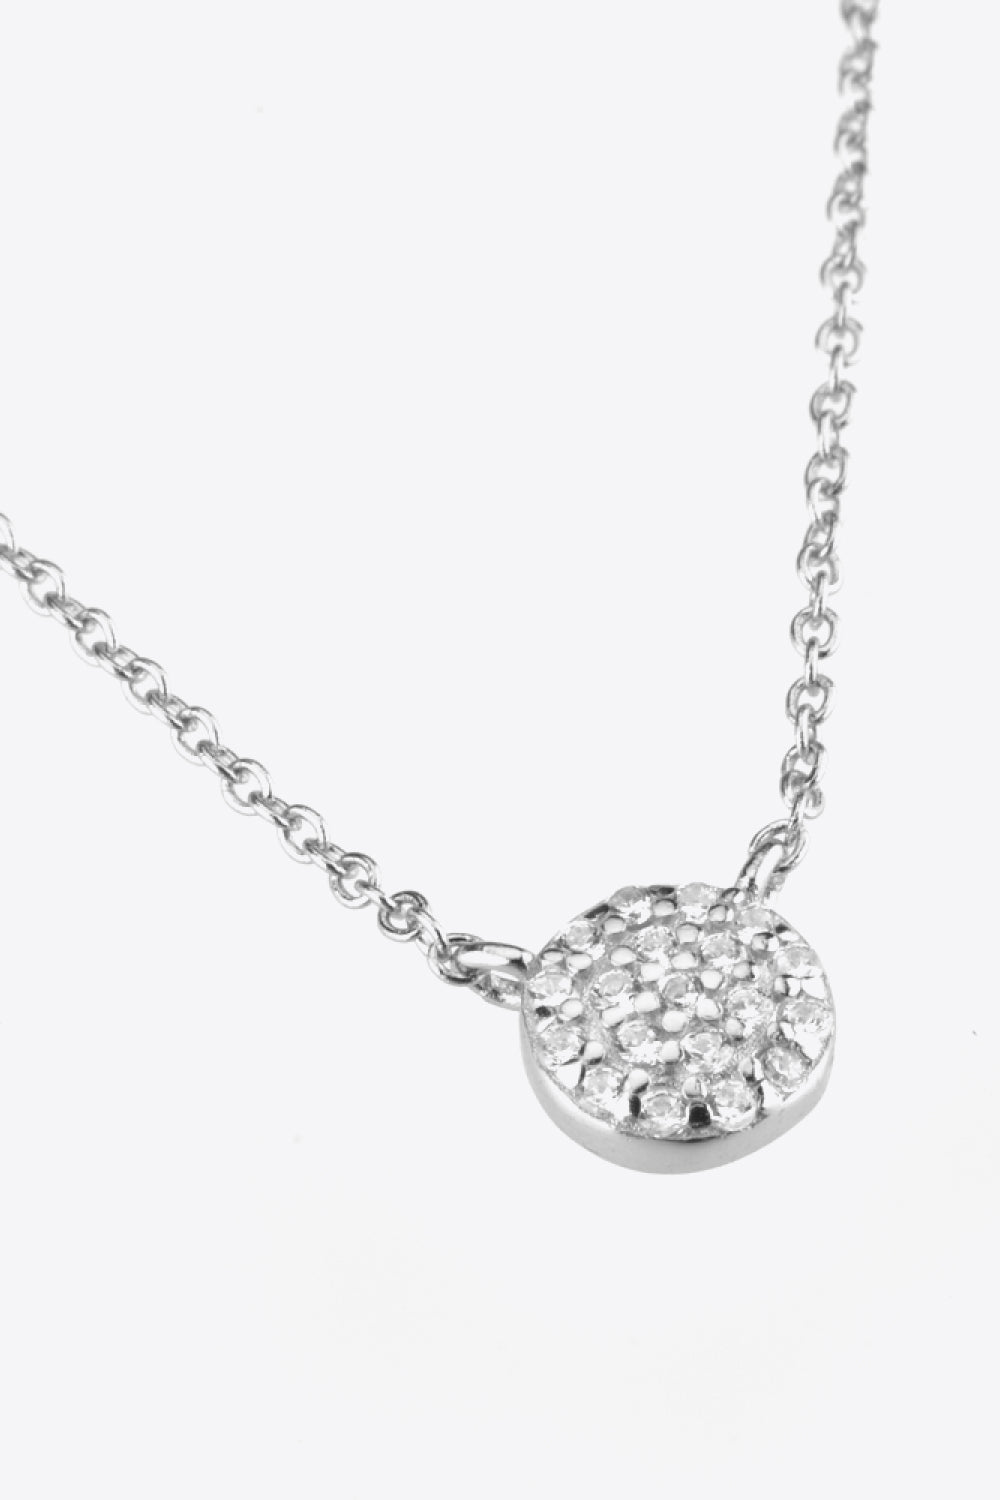 Zircon Decor Pendant 925 Sterling Silver Necklace - Guy Christopher 